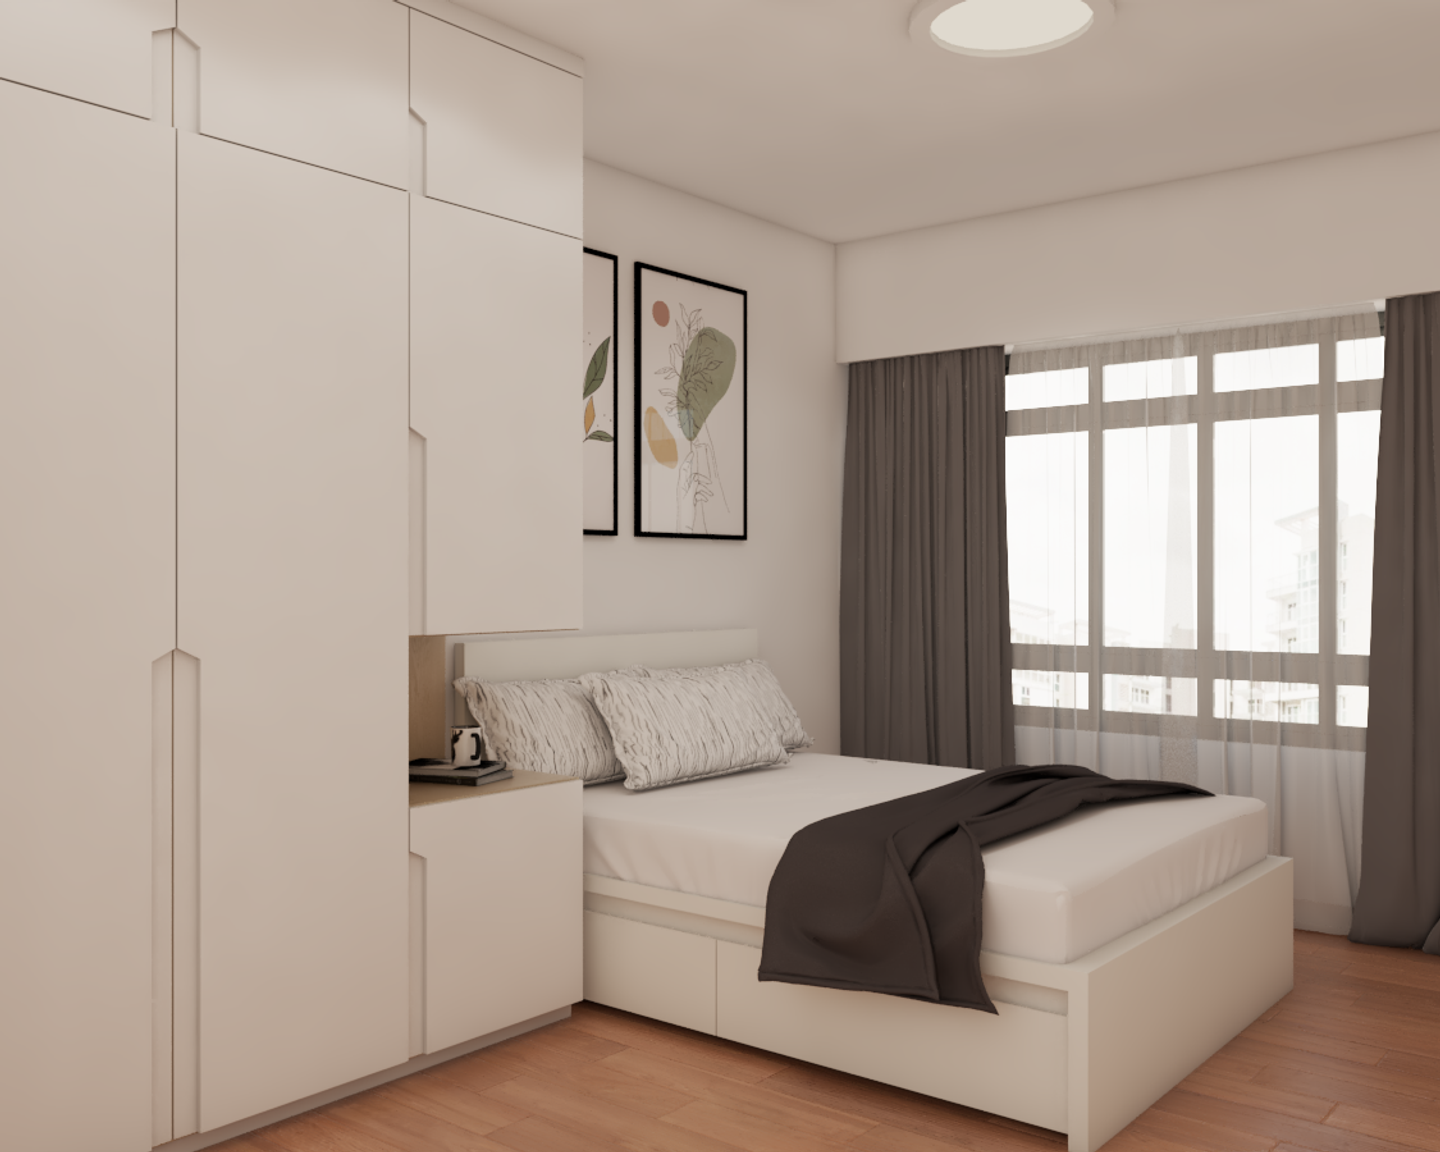 Beige Master Bedroom Interior Design with Wardrobe and Loft - Livspace